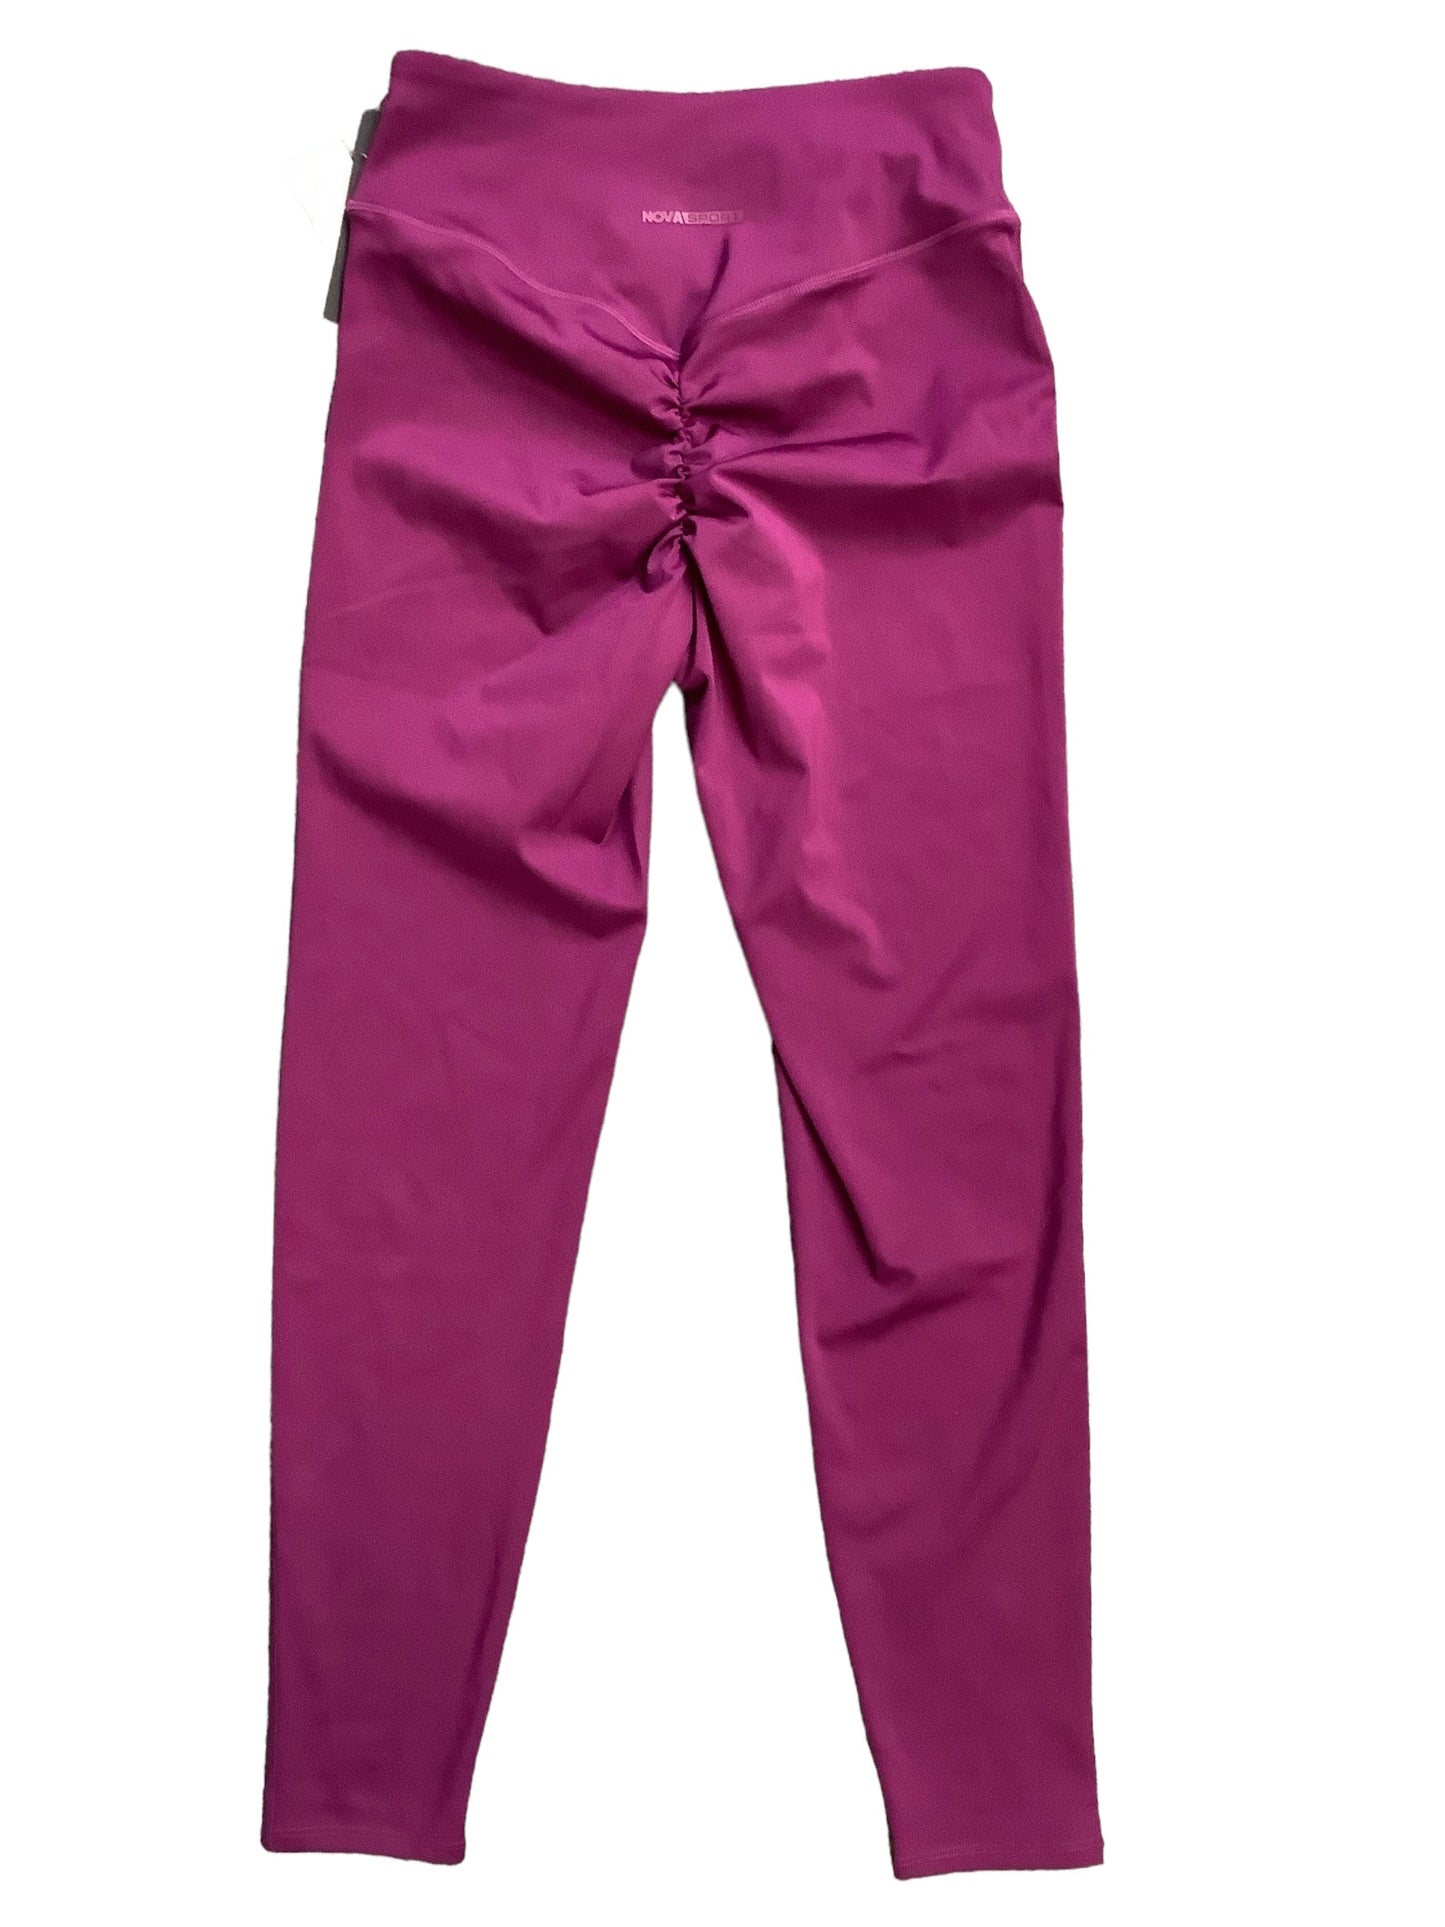 Athletic Pants 2pc By Fashion Nova  Size: S